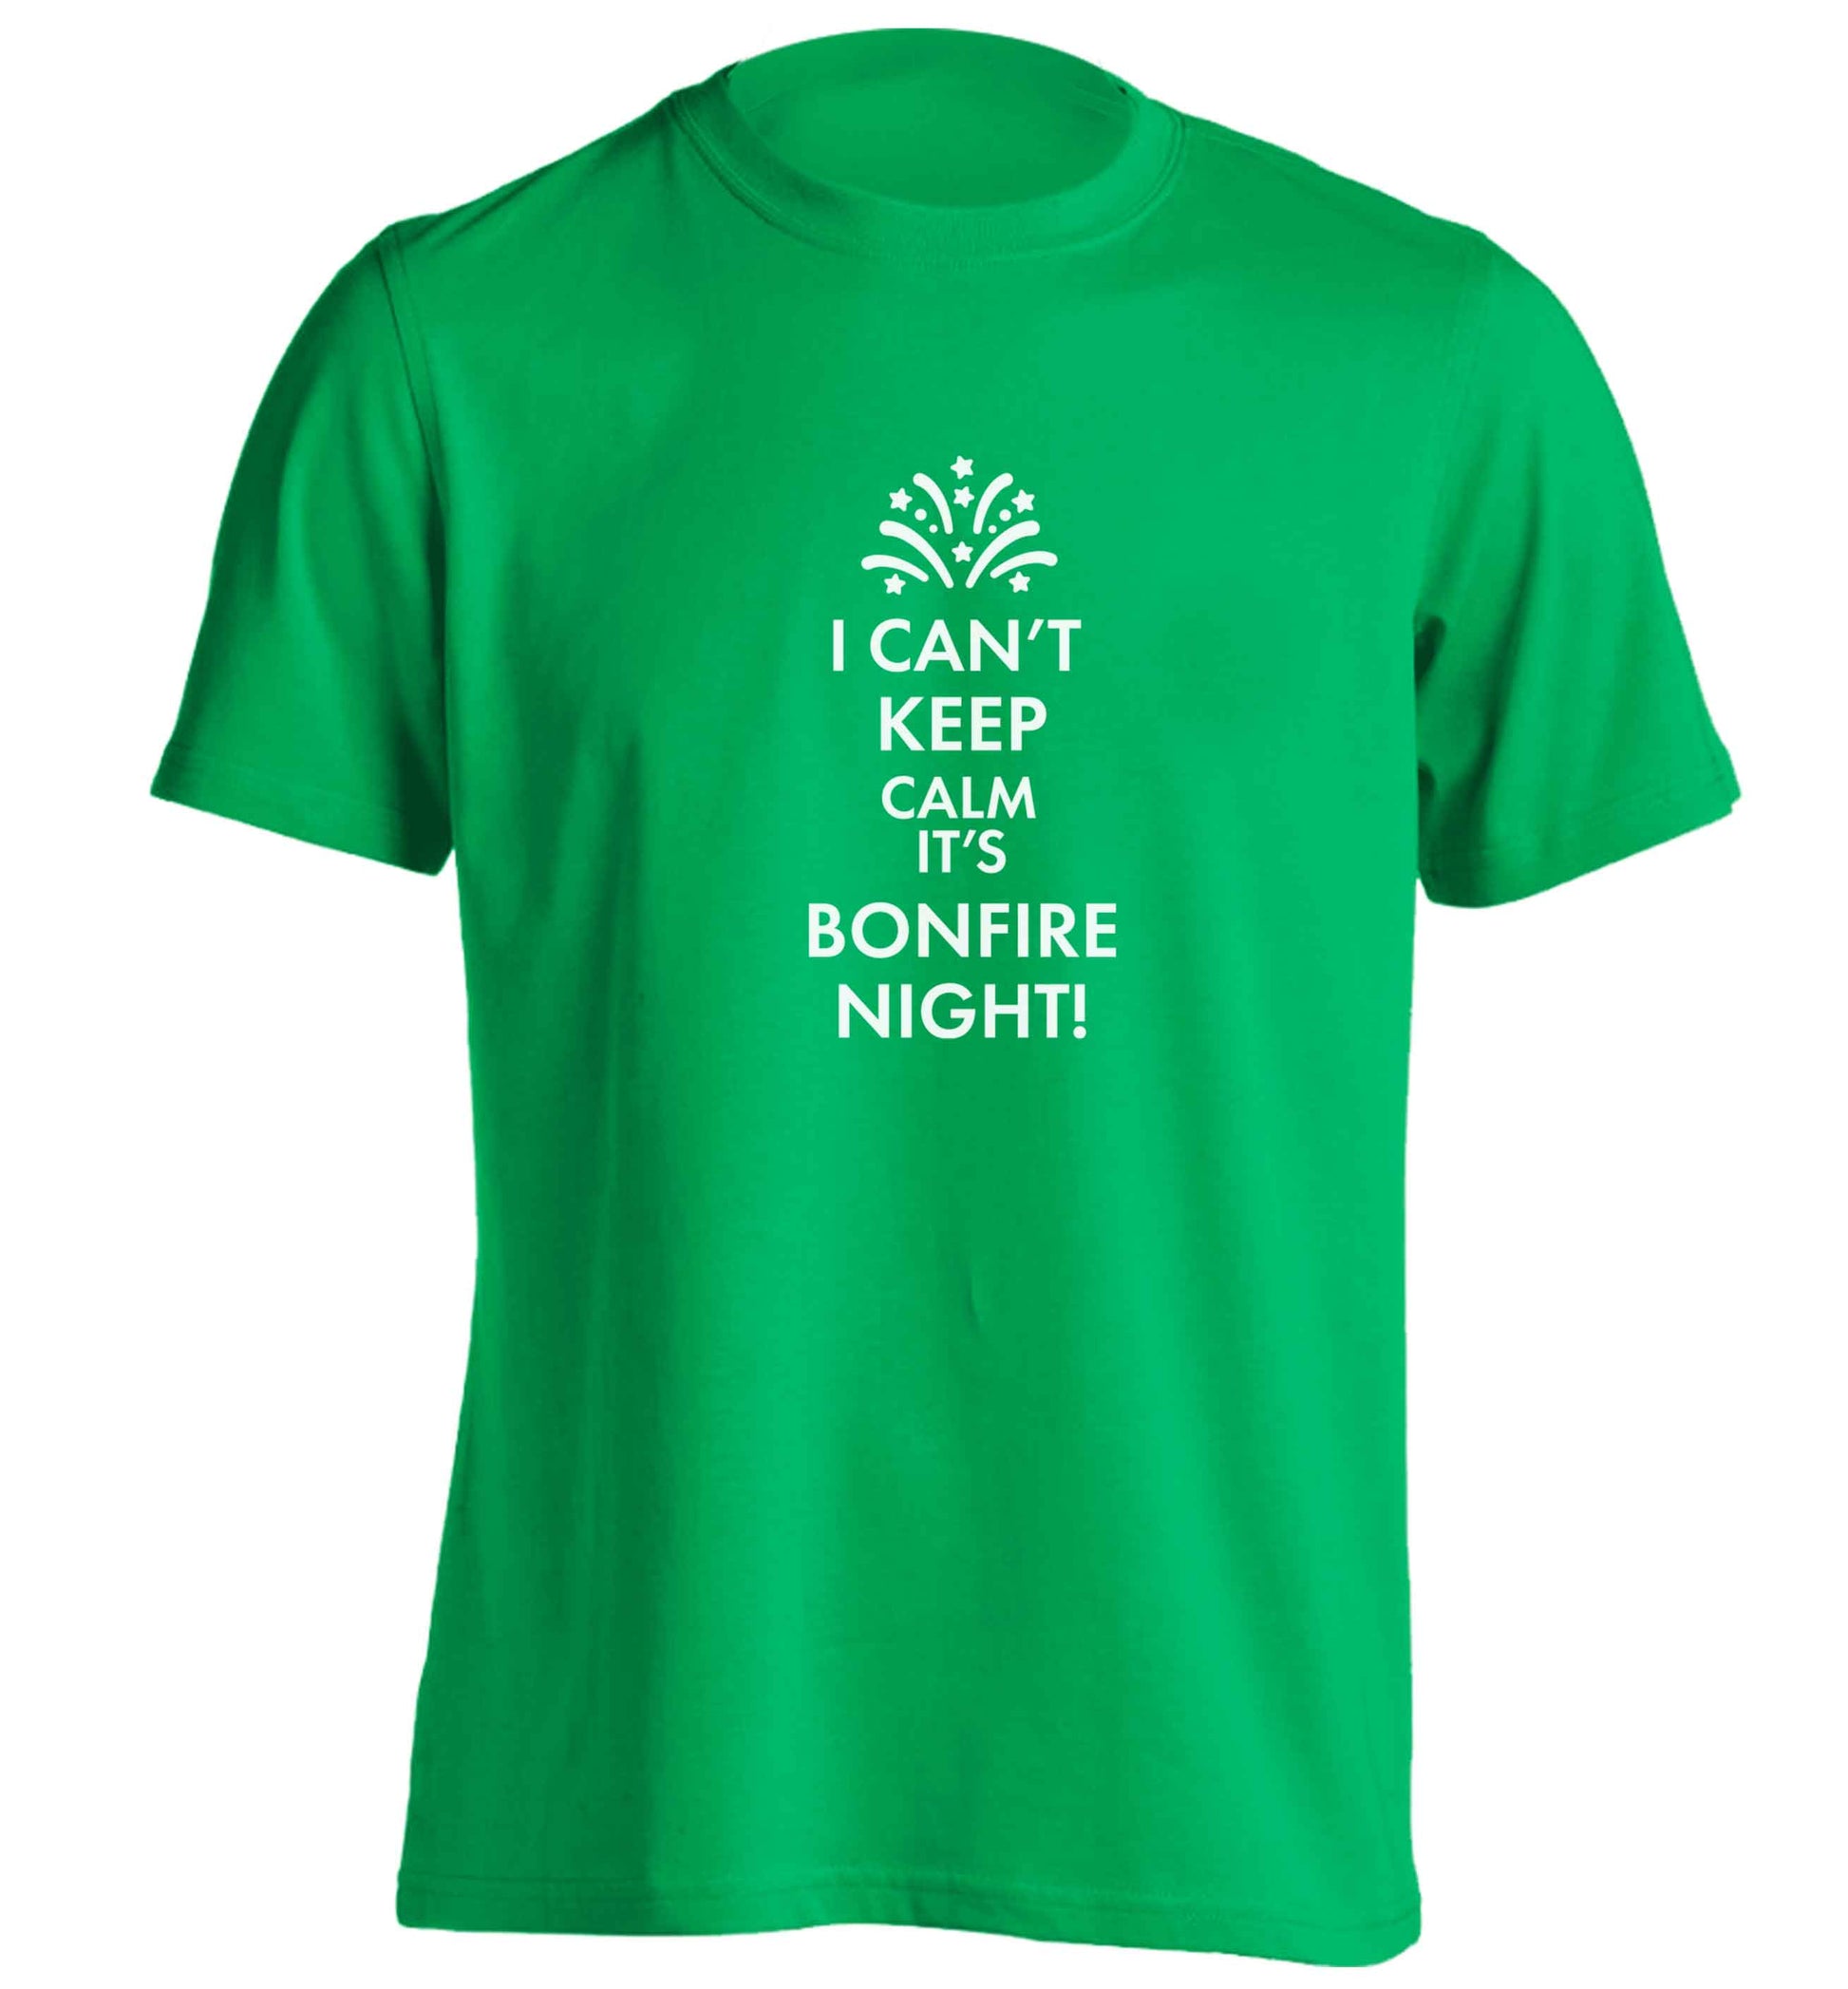 I can't keep calm its bonfire night adults unisex green Tshirt 2XL